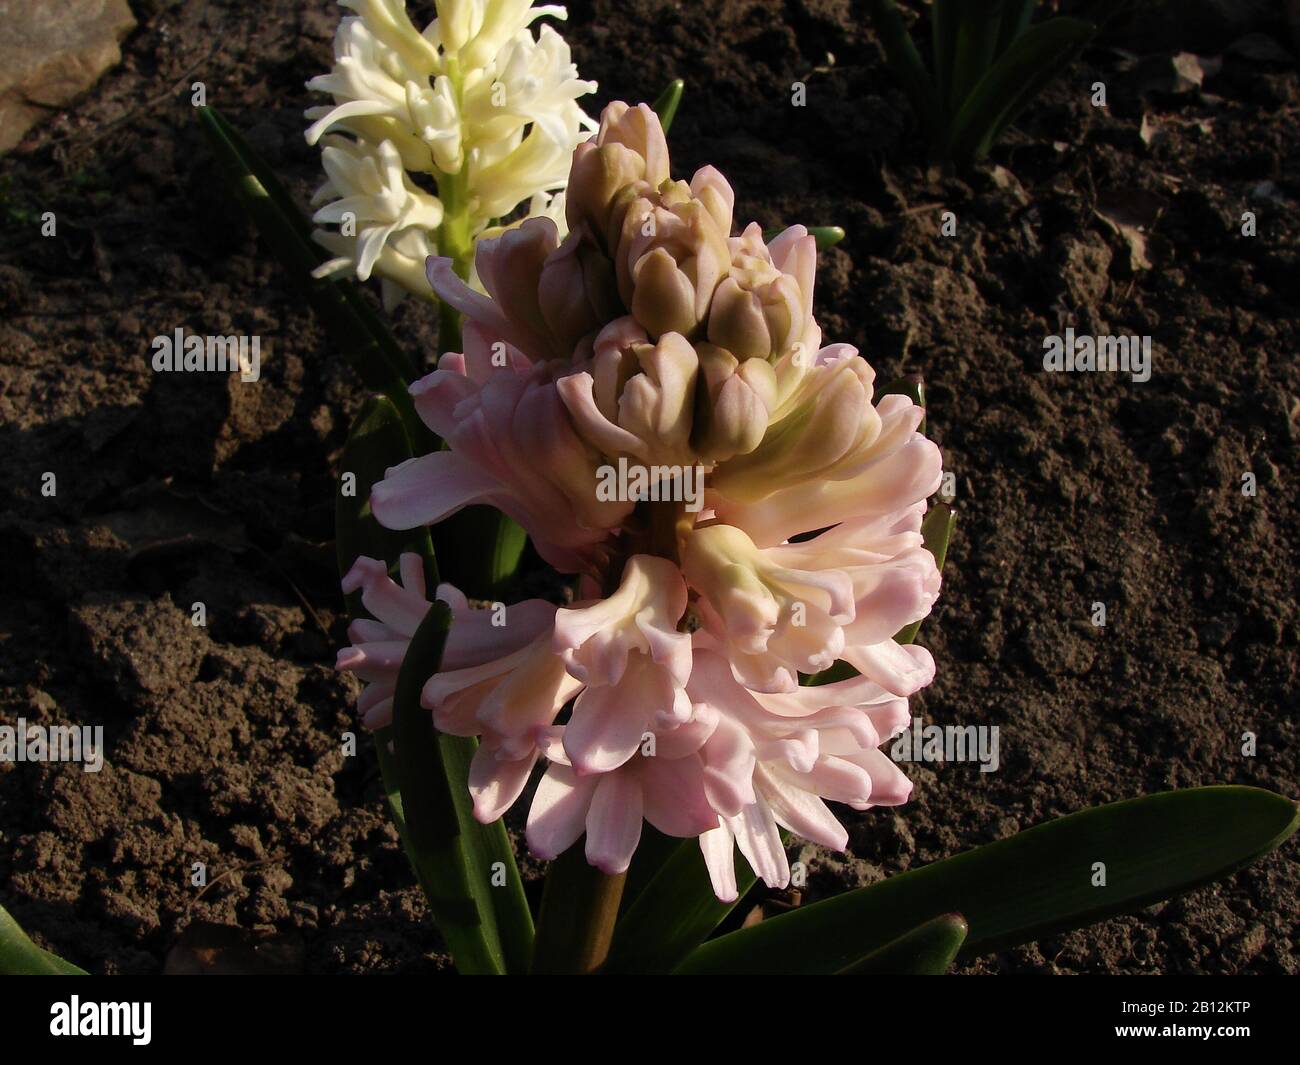 beautiful flowers bloom in the garden Stock Photo